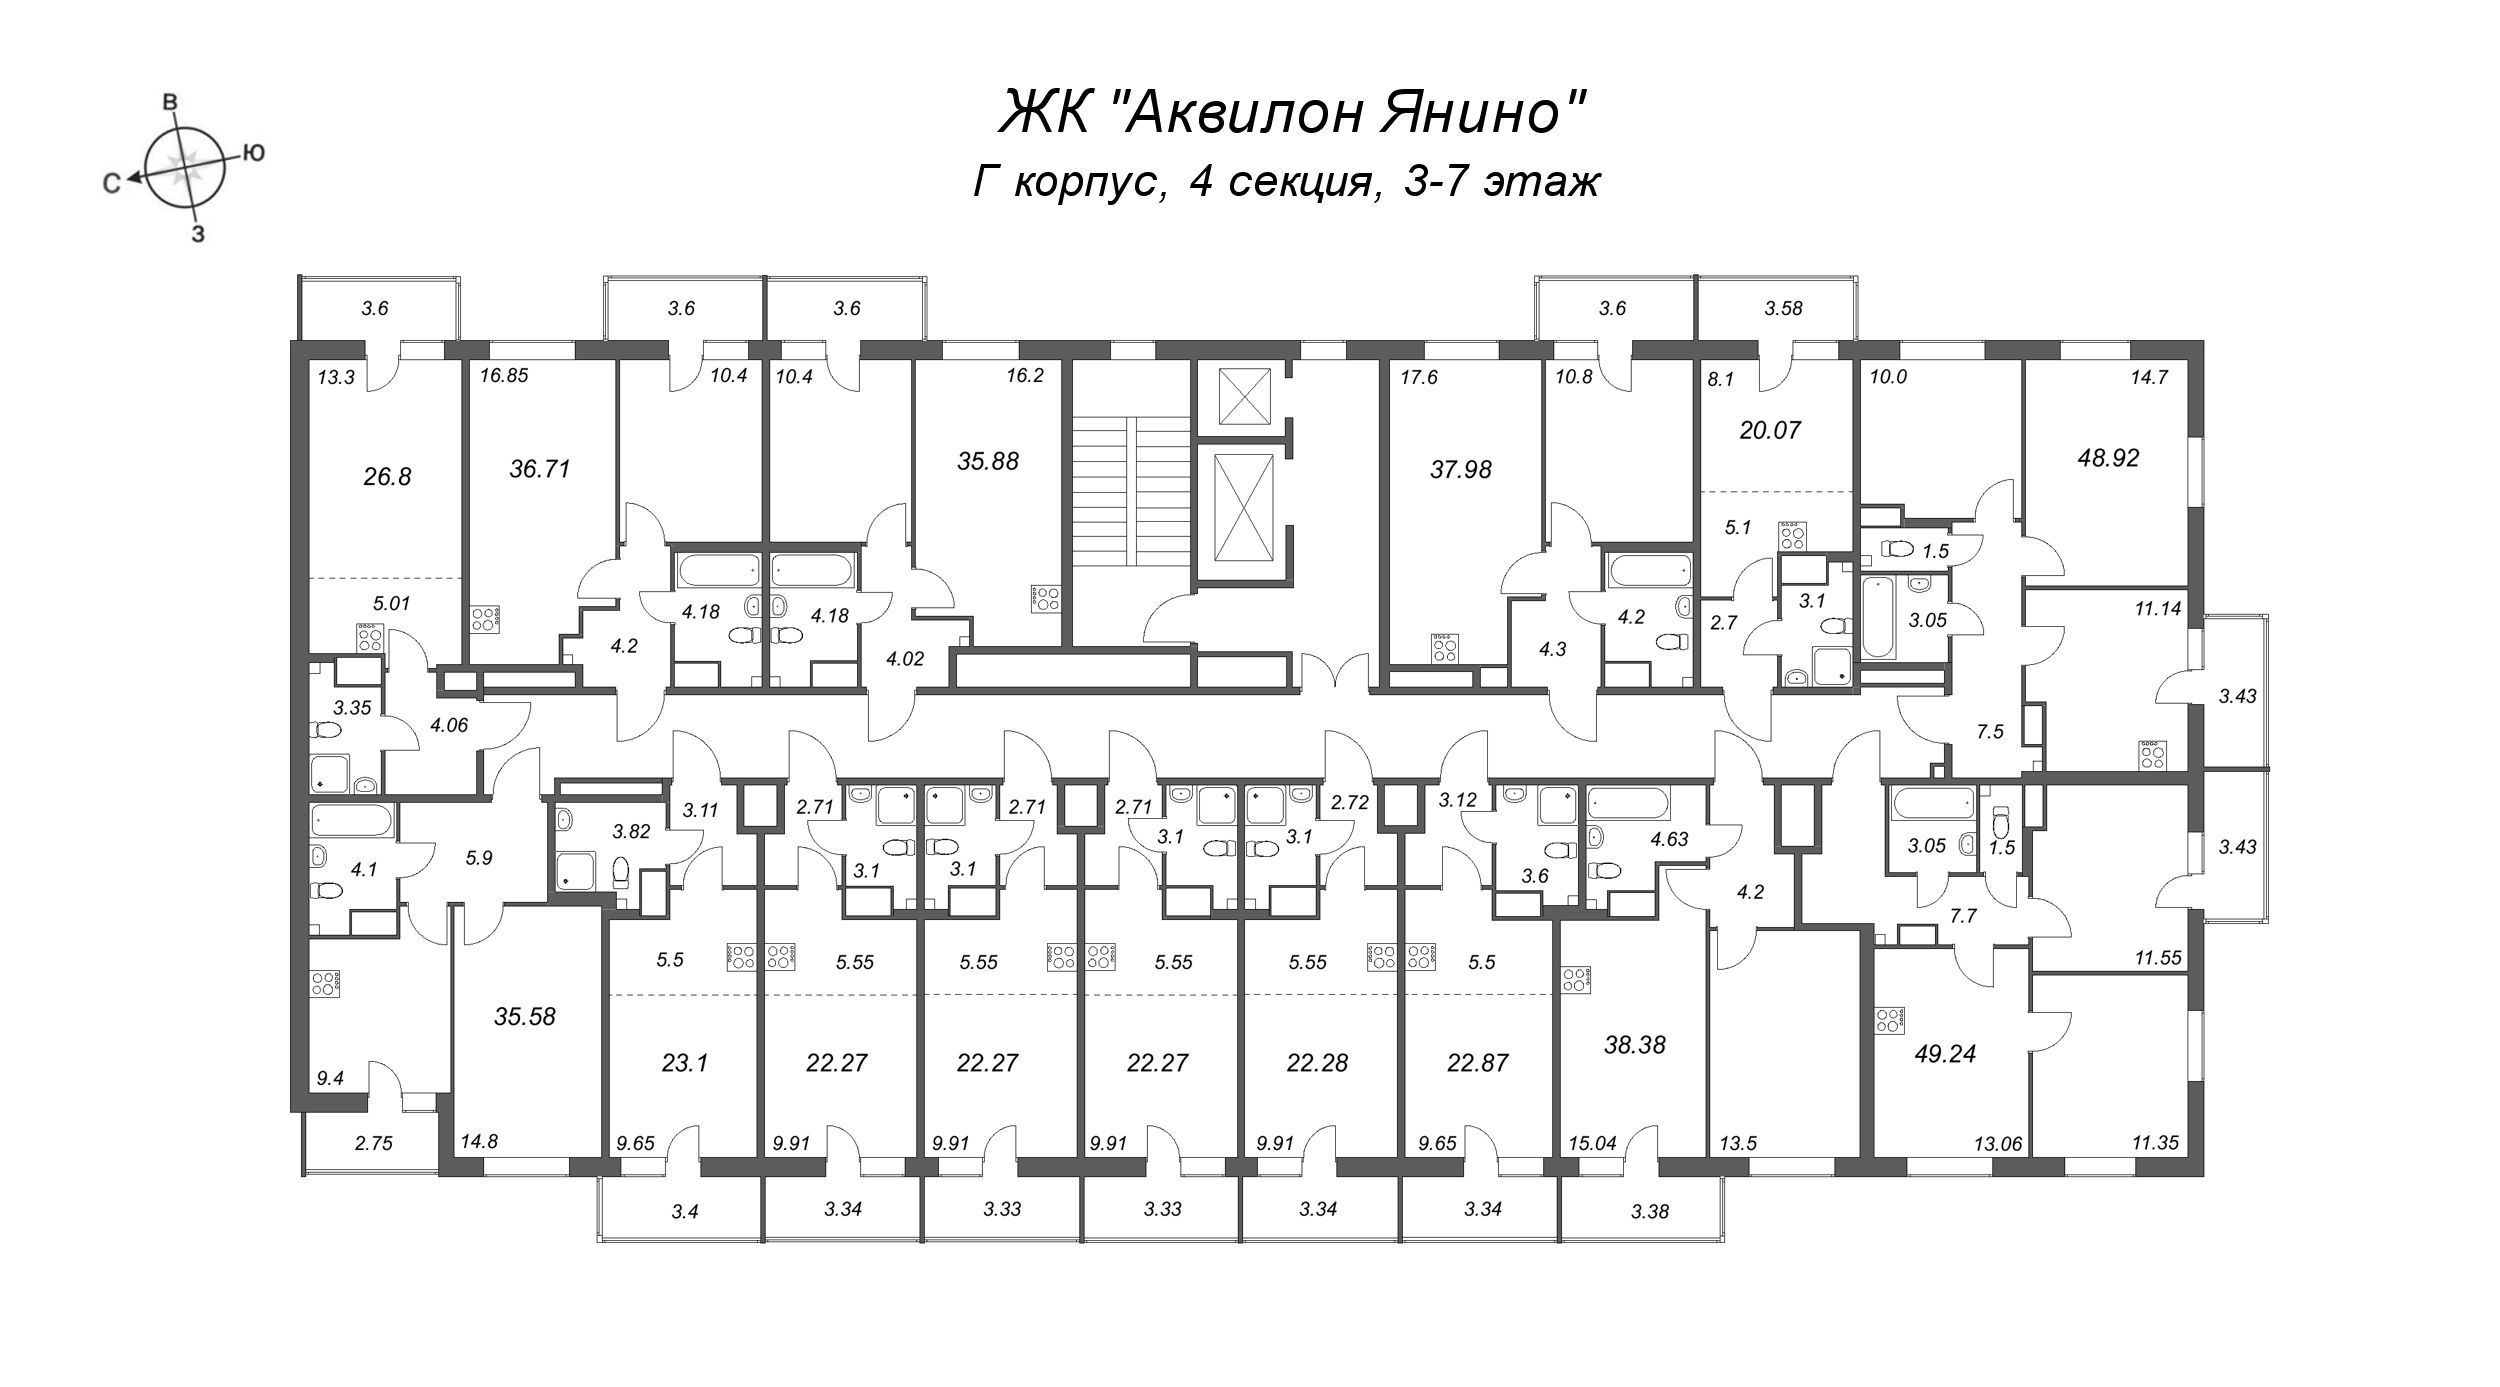 2-комнатная (Евро) квартира, 37.98 м² - планировка этажа